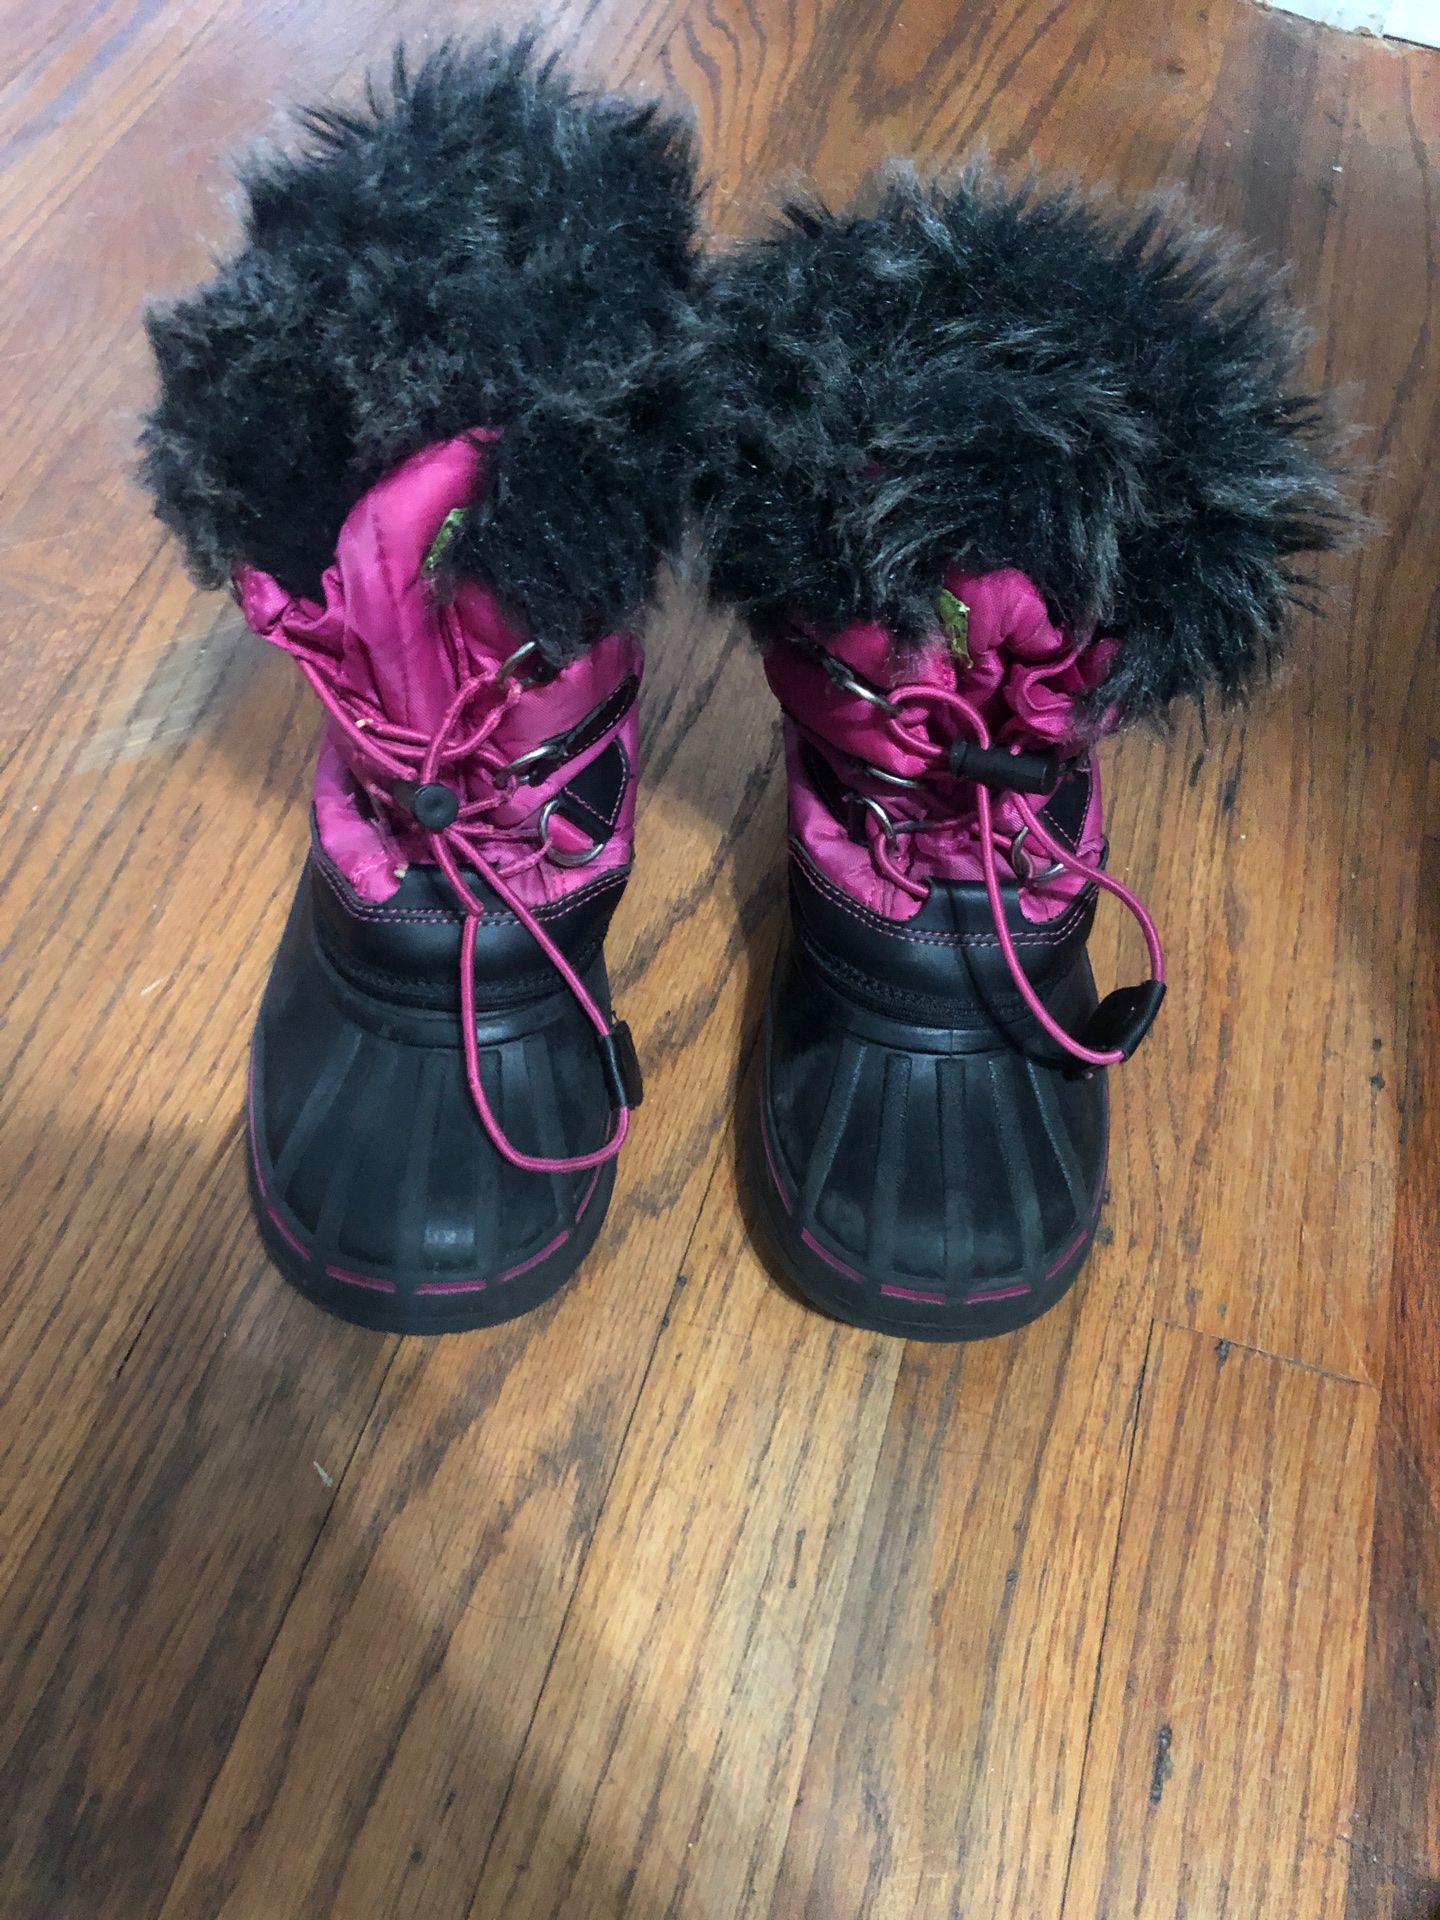 Kids snow boots